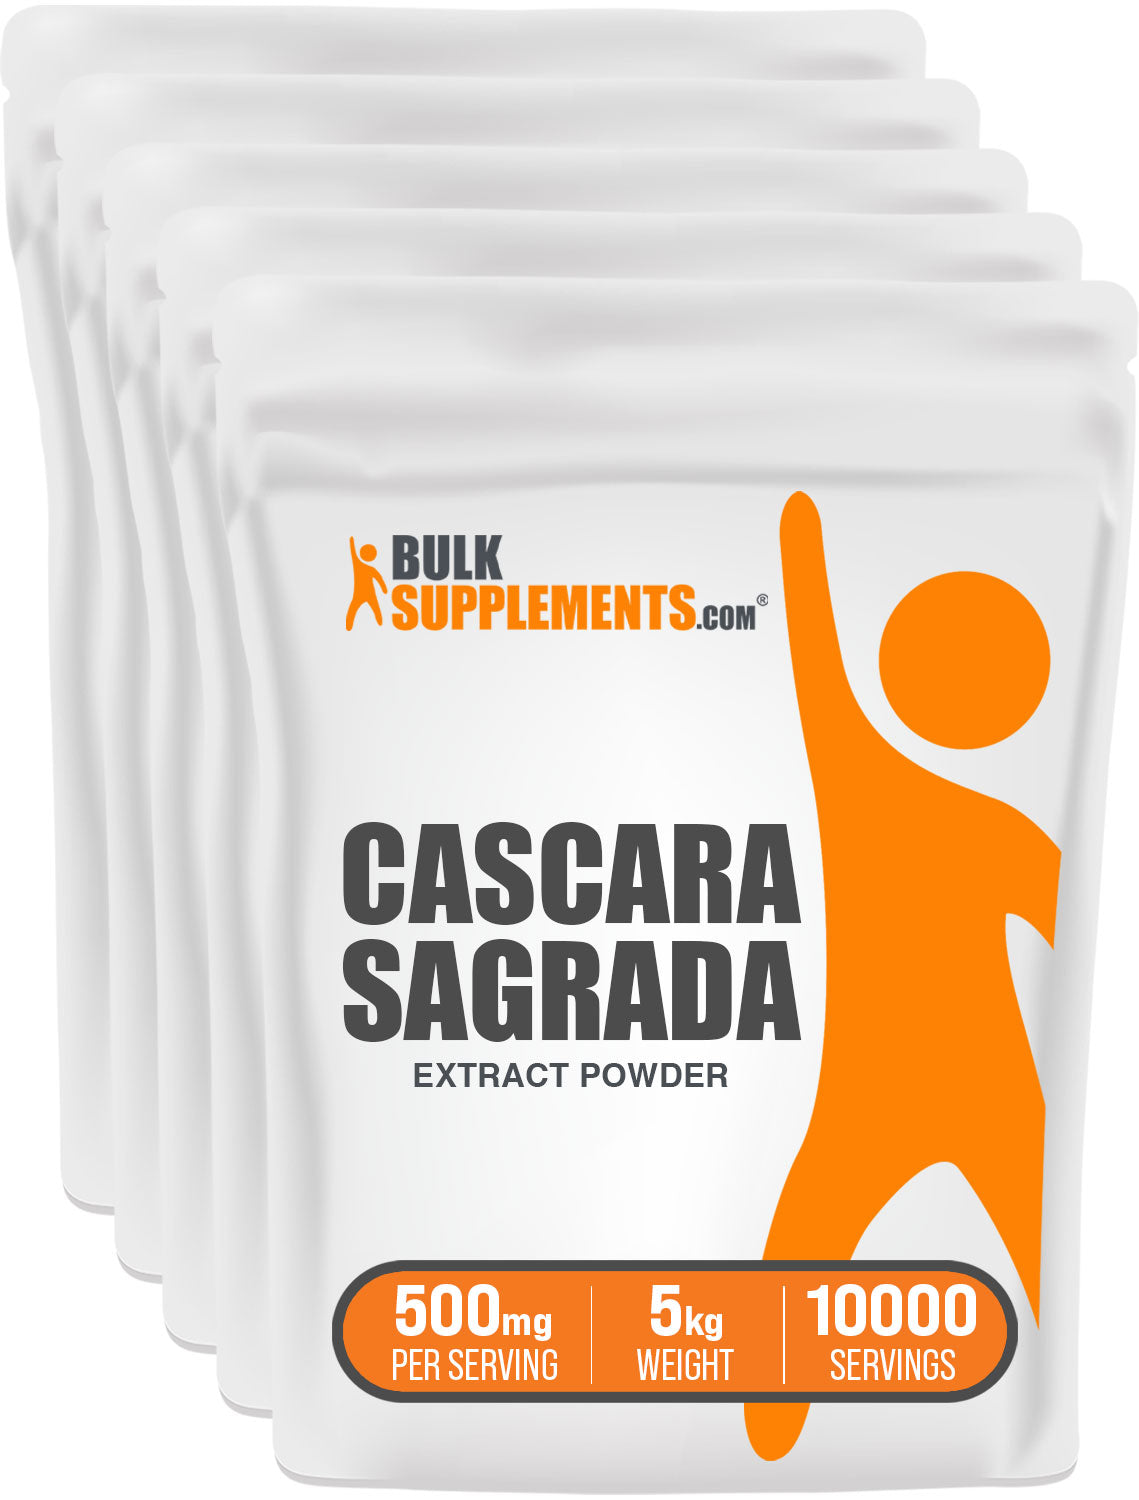 5kg of cascara sagrada